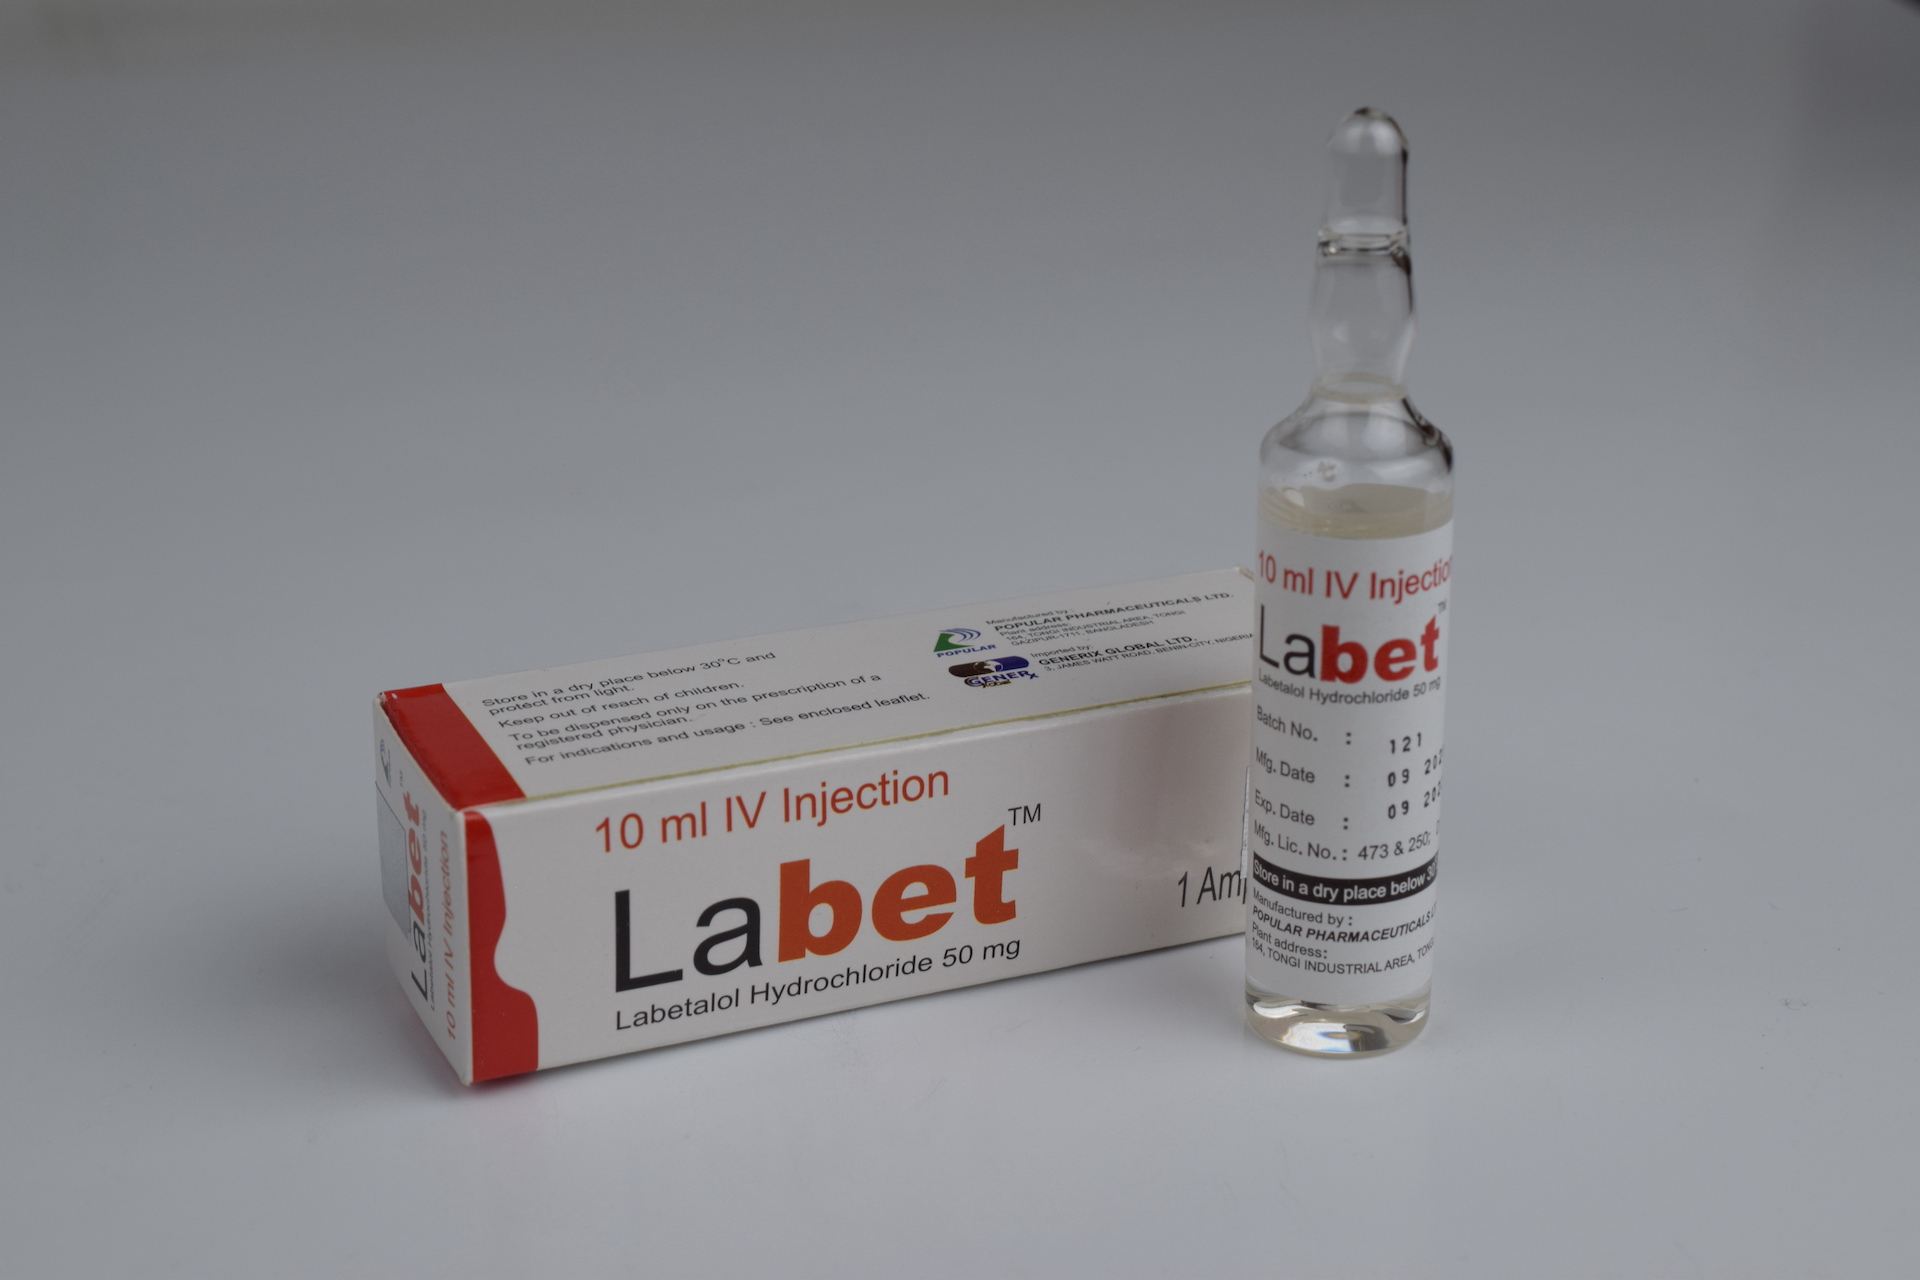 LABETALOL HYDROCHLORIDE injection